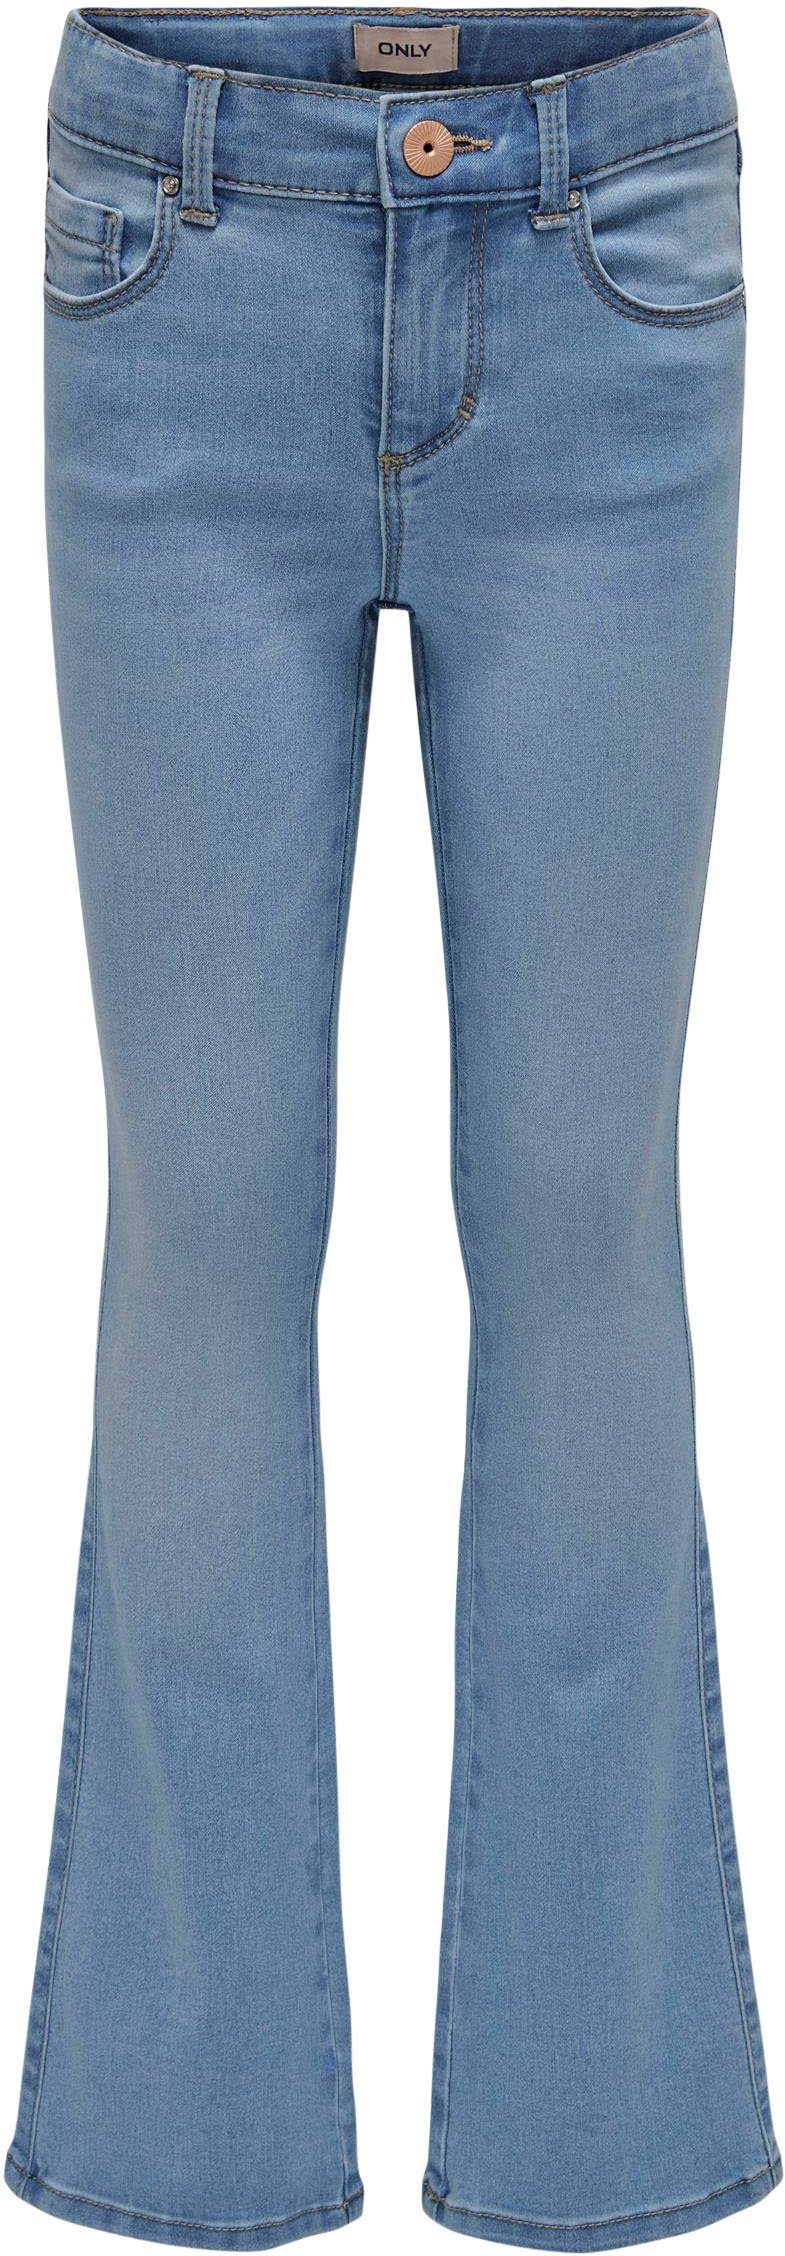 LIFE NOOS KIDS KOGROYAL ONLY Bootcut-Jeans FLARED PIM020 REG